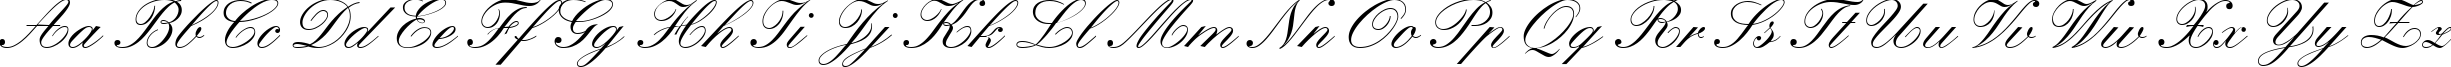 Пример написания английского алфавита шрифтом Heather Script One